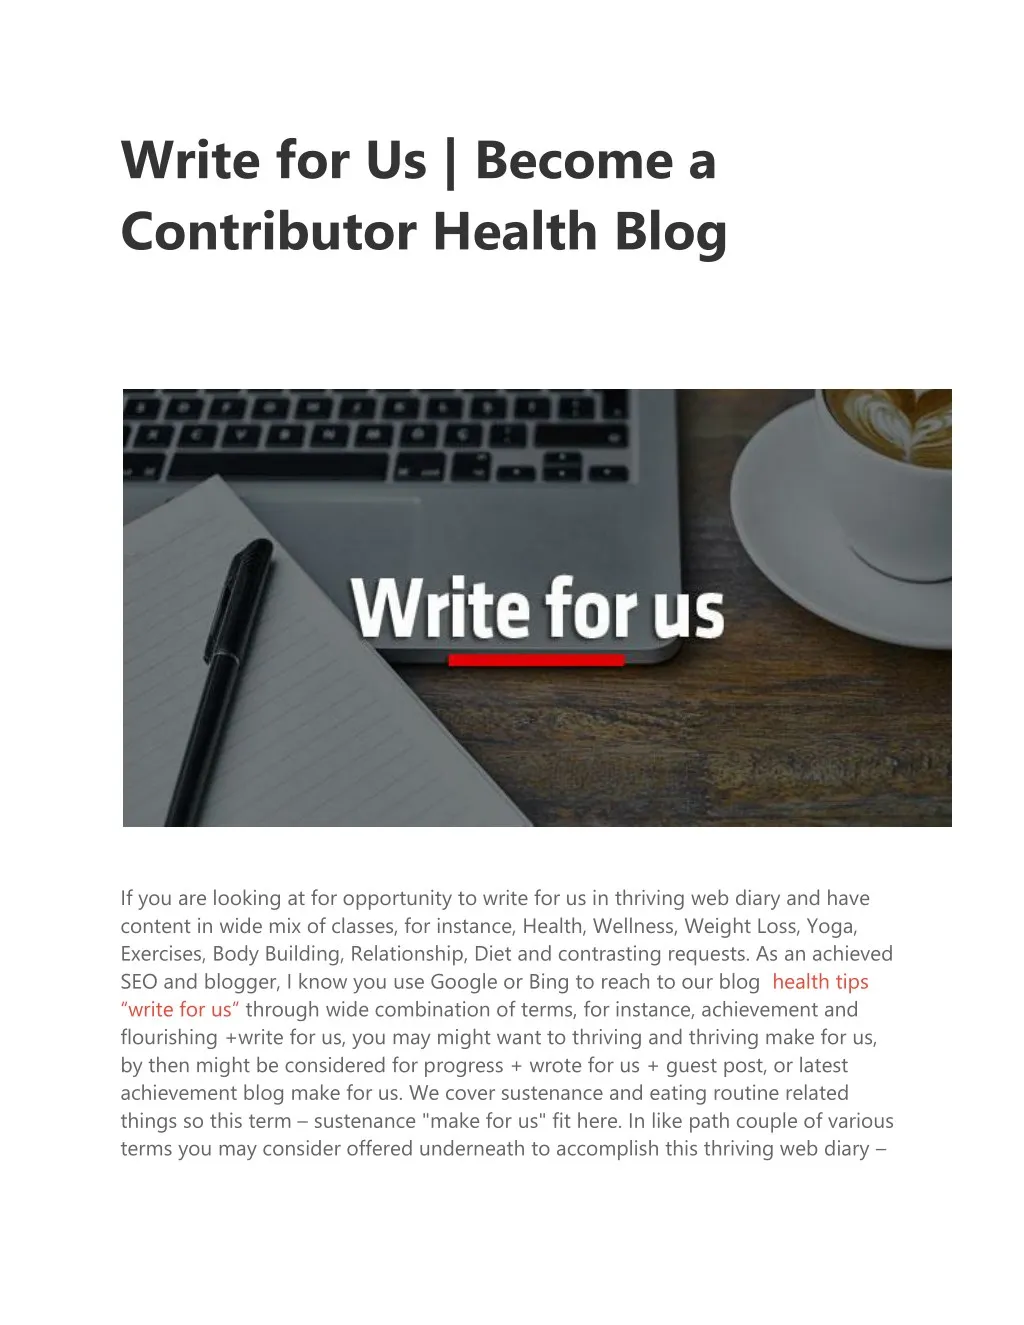 write for us become a contributor health blog